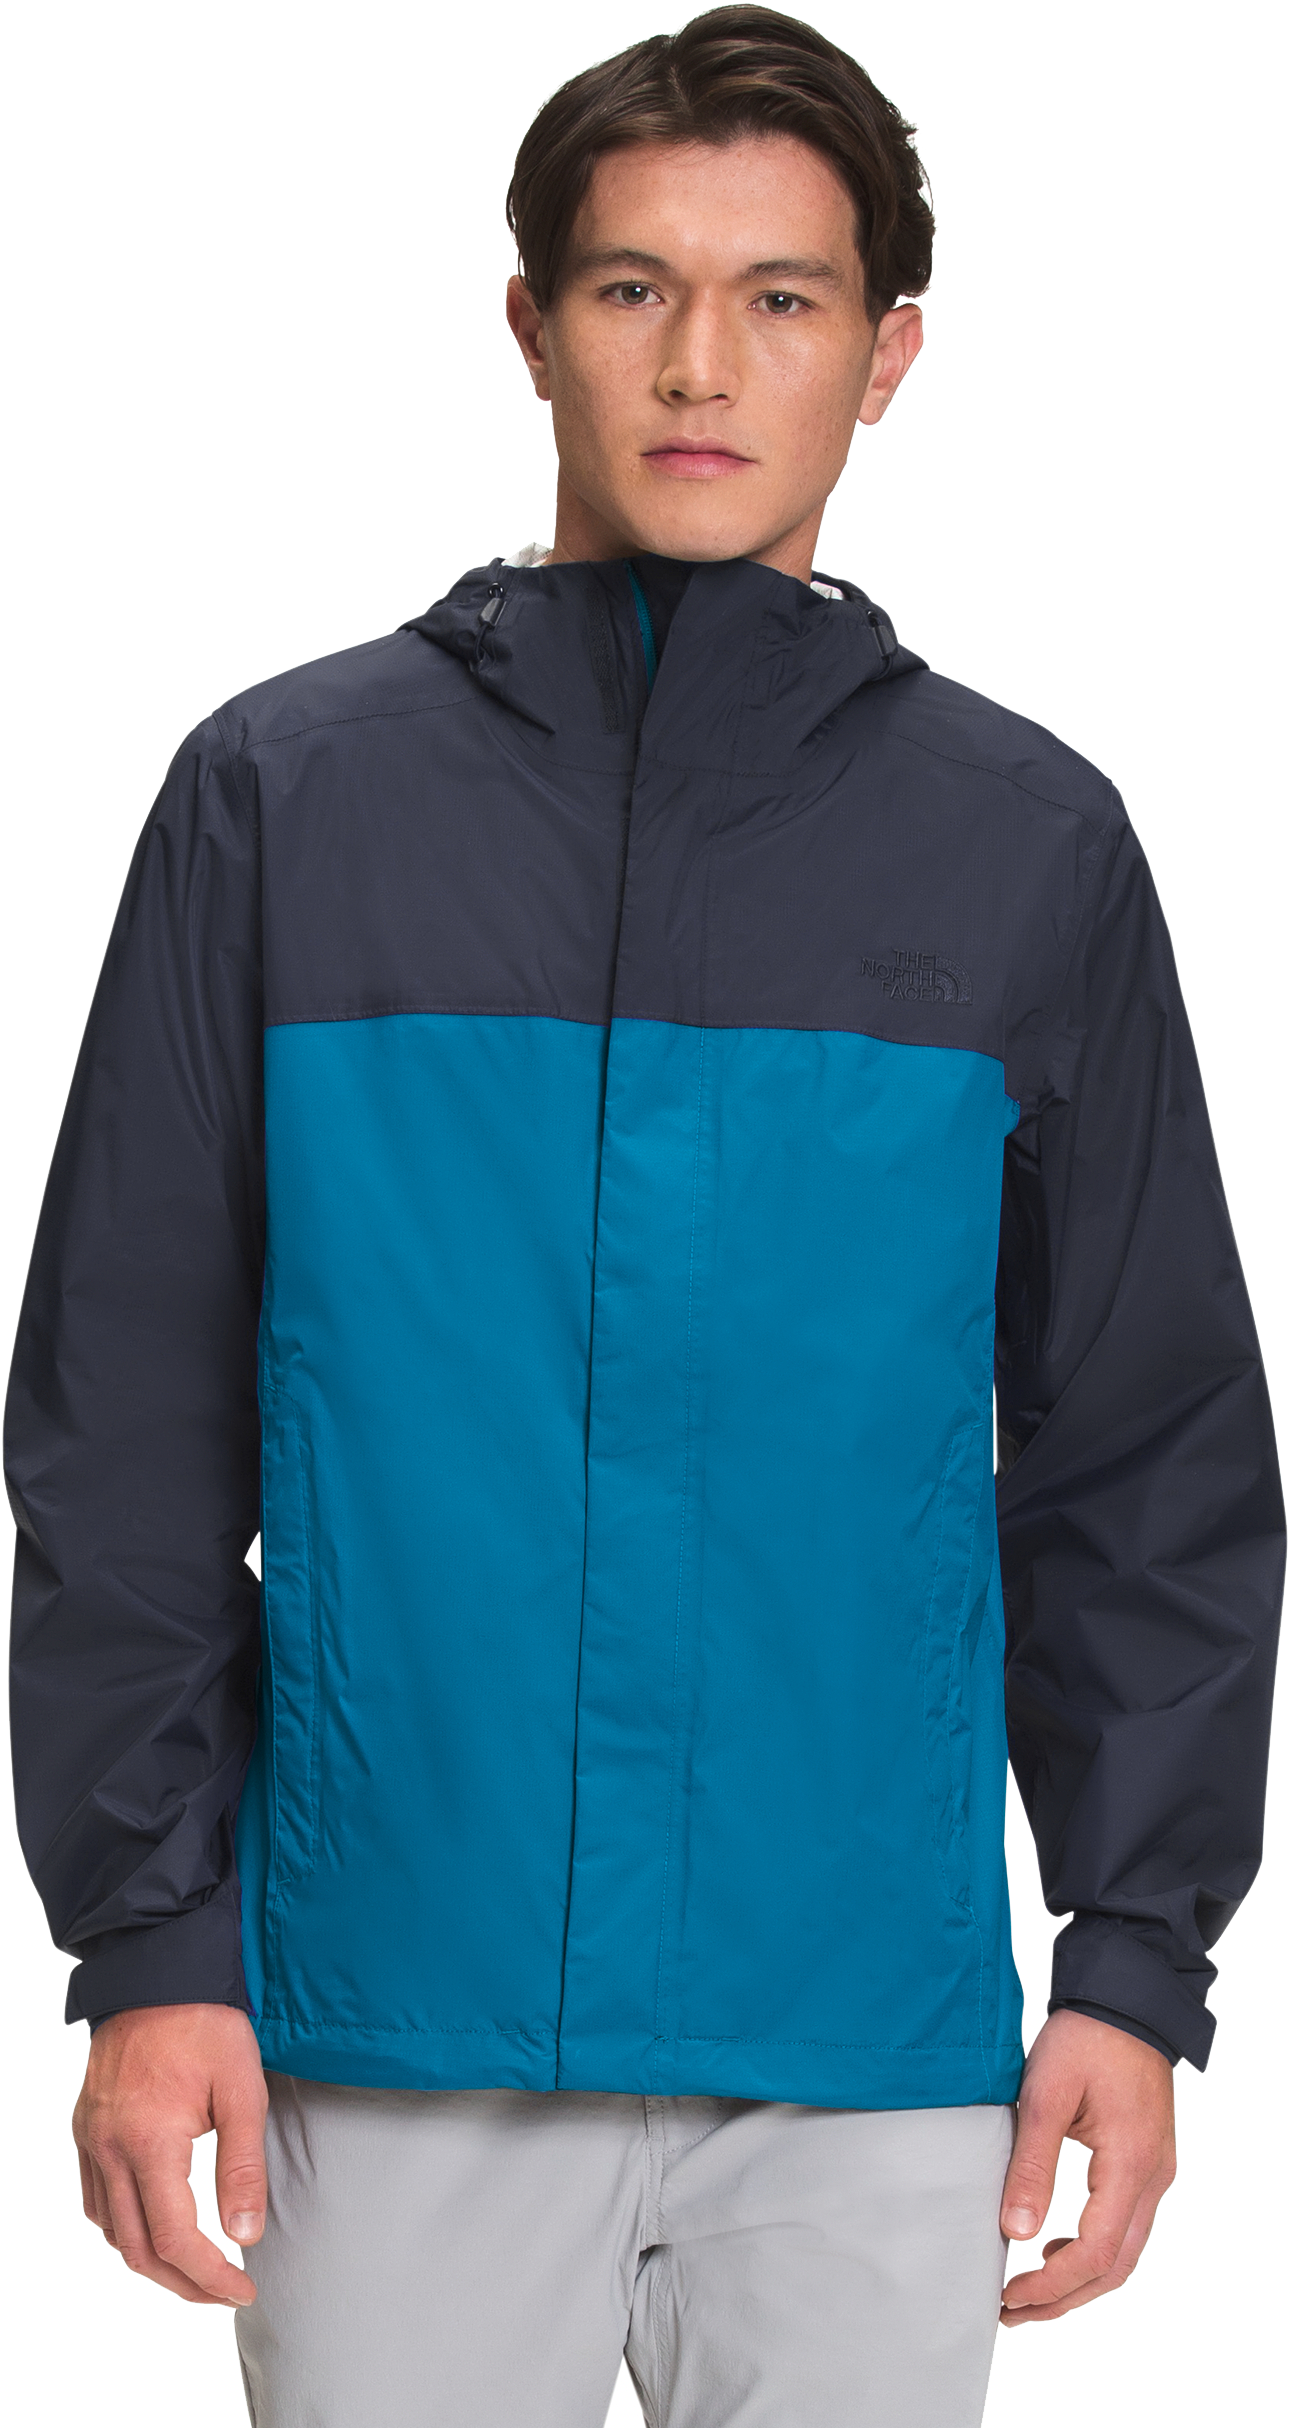 The North Face Venture 2 Jacket for Men - Aviator Navy/Banff Blue - M